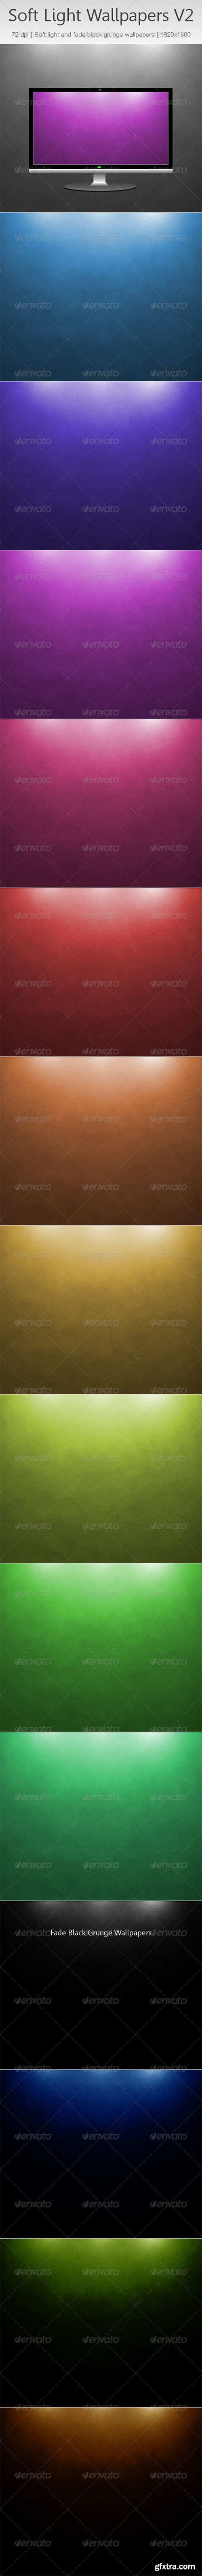 GraphicRiver - Soft Light Wallpapers V2